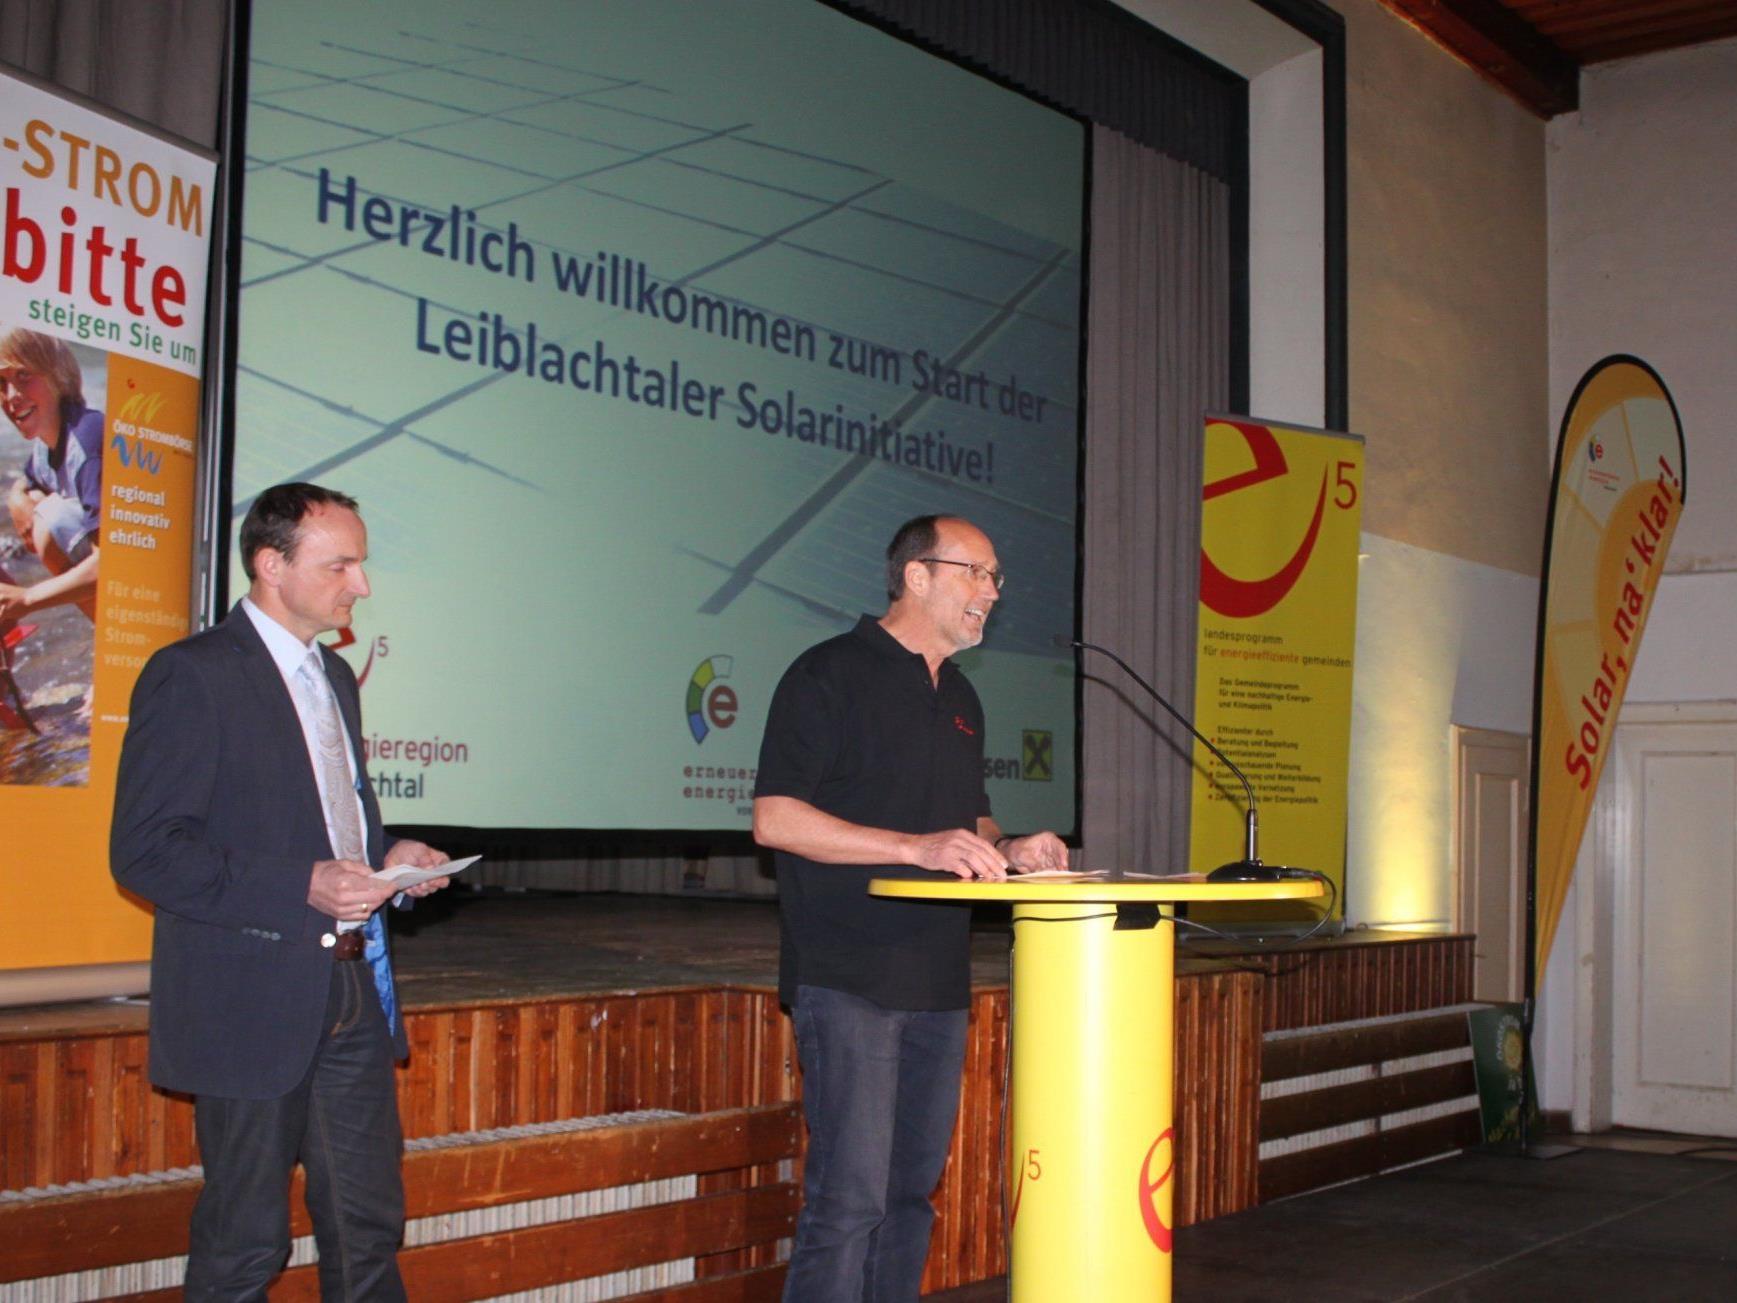 Energieregion Leiblachtal startet energieautonome Solarinitiative mit Bürgerbeteiligung.